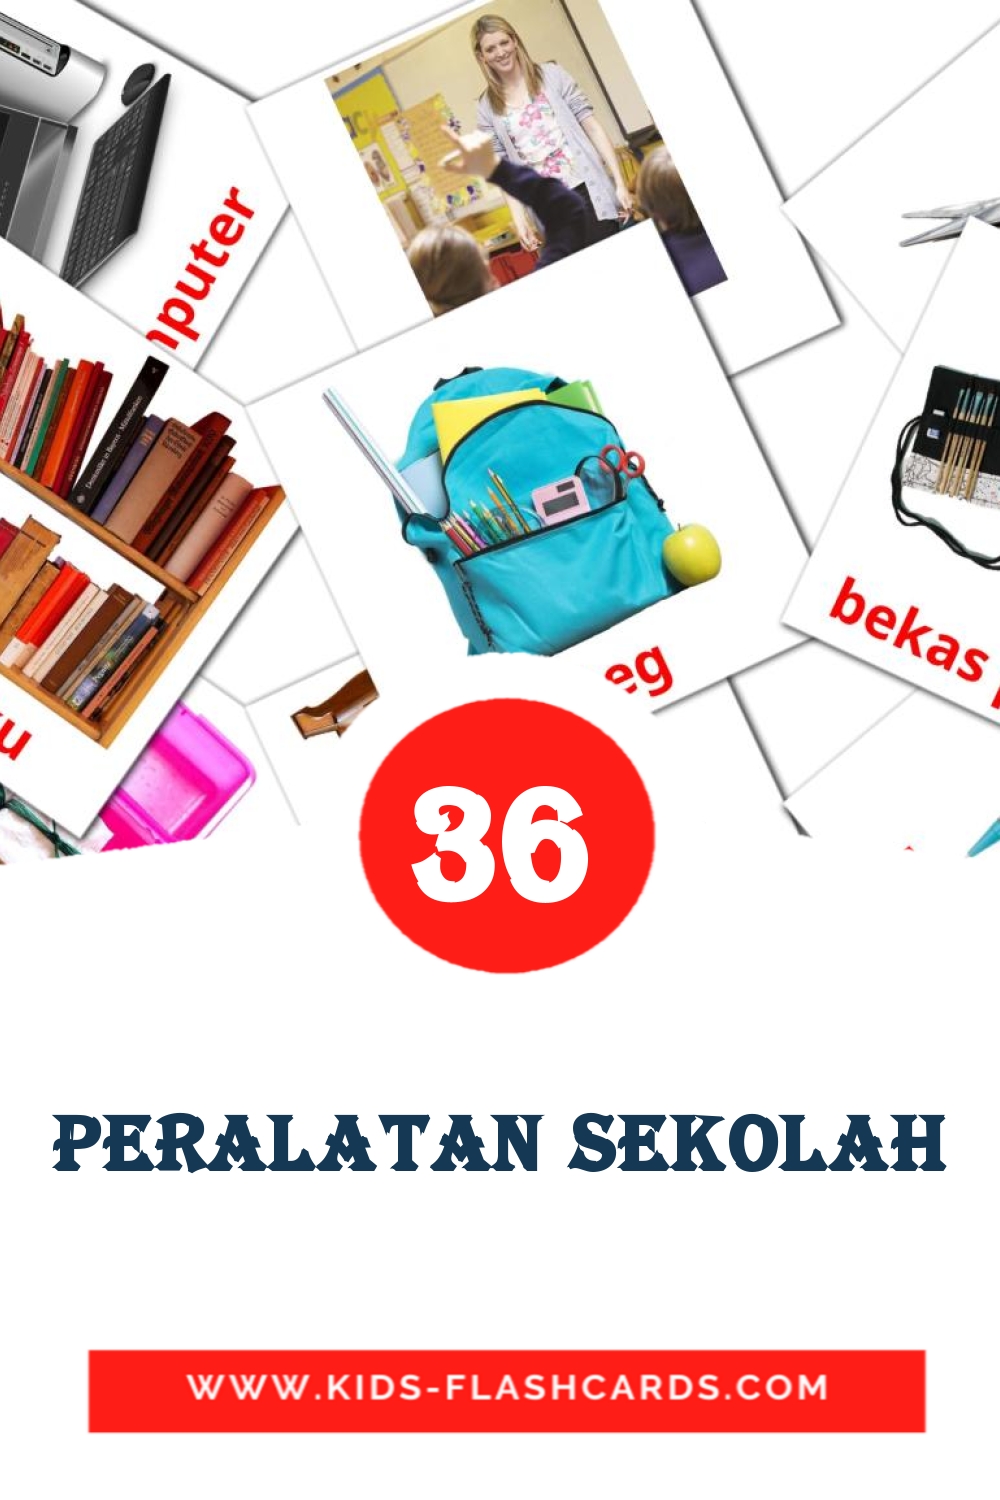 36 Peralatan Sekolah Bildkarten für den Kindergarten auf Malaiisch